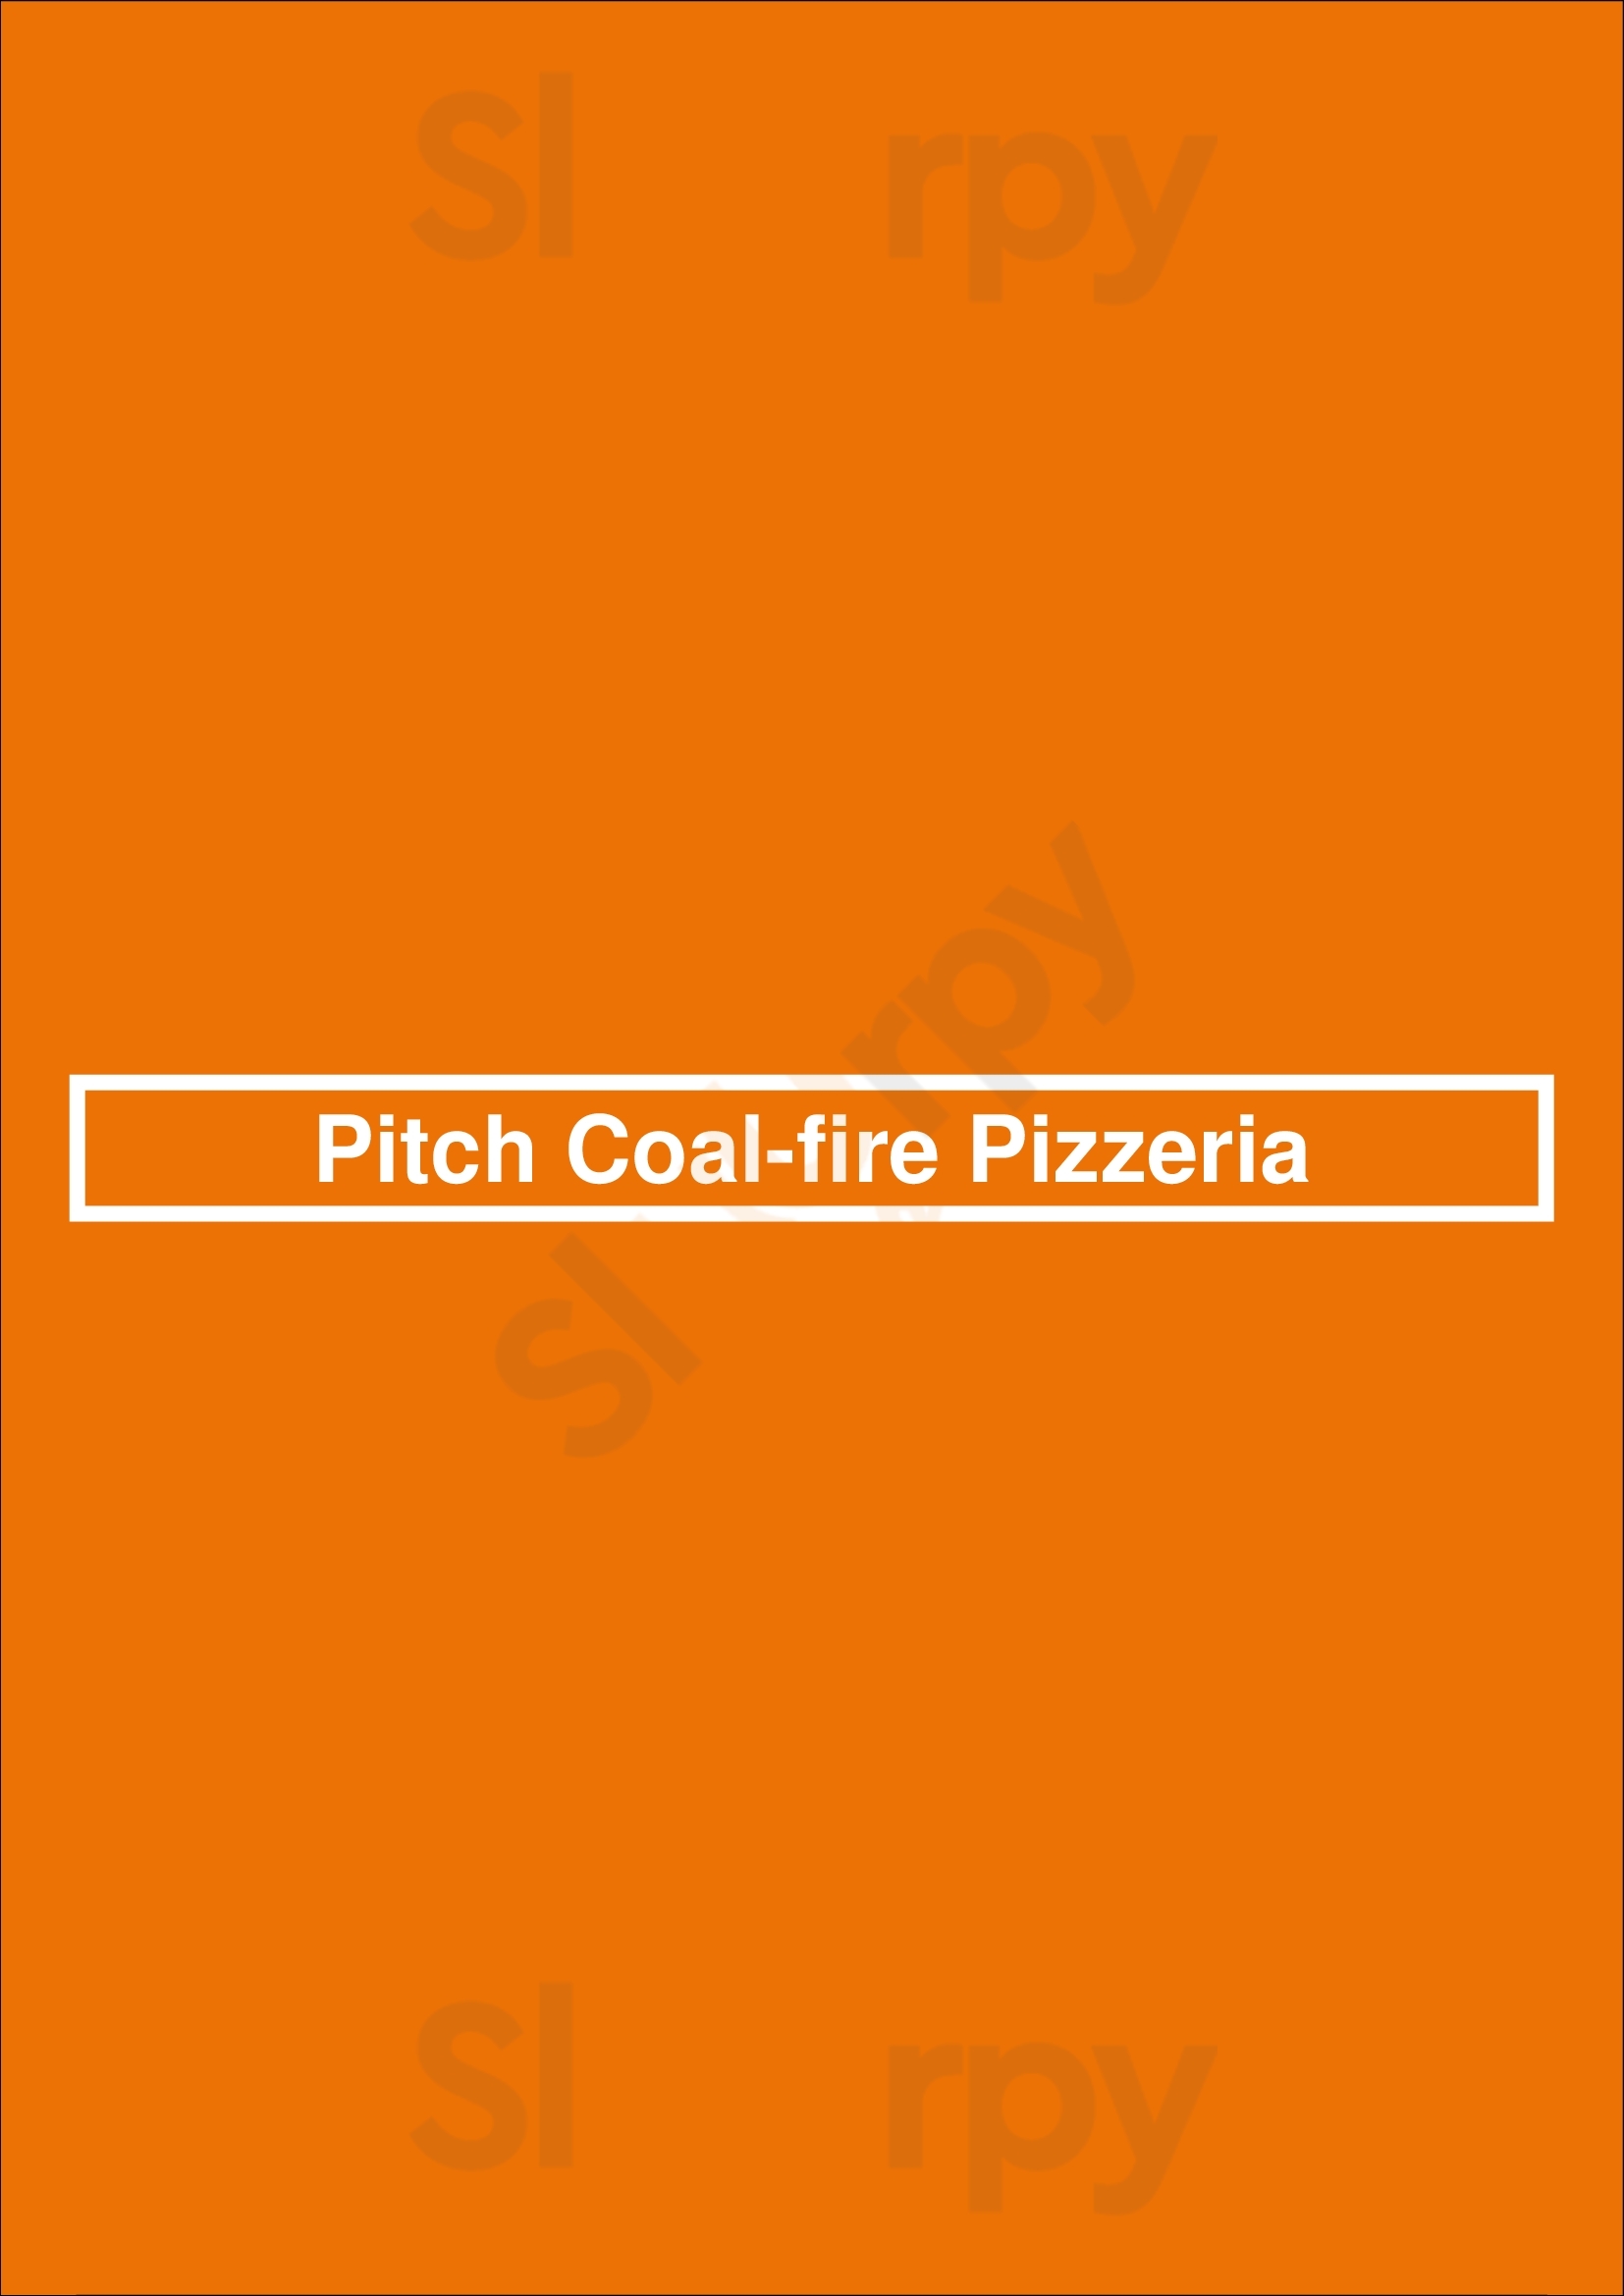 Pitch Coal-fire Pizzeria Omaha Menu - 1